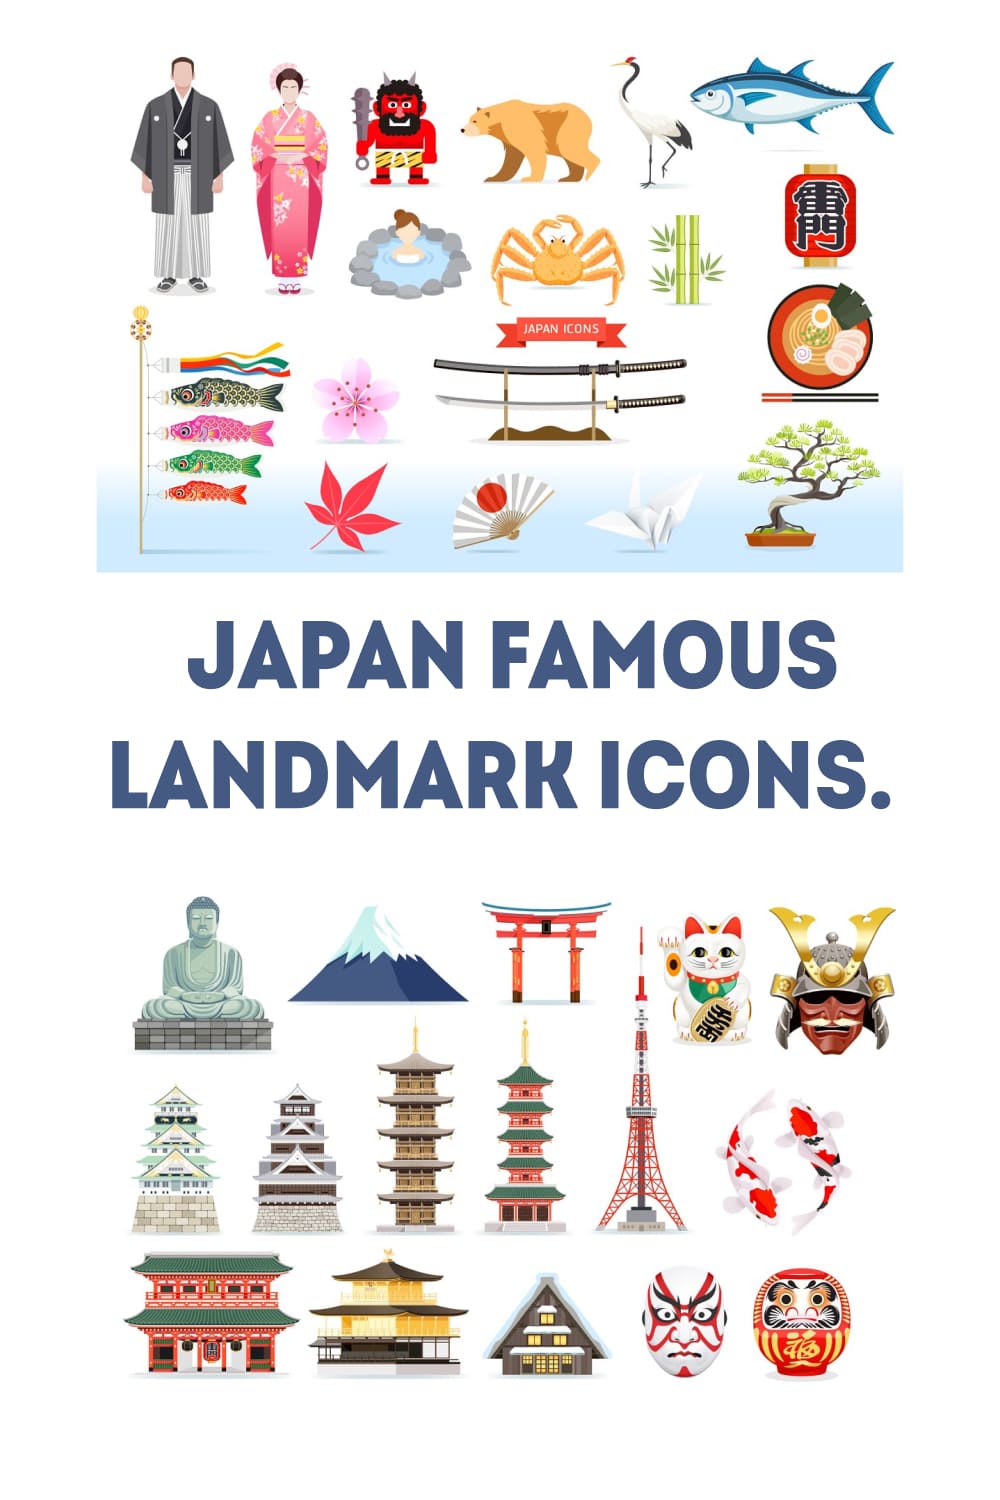 Japan Famous Landmark Icons - Pinterest.